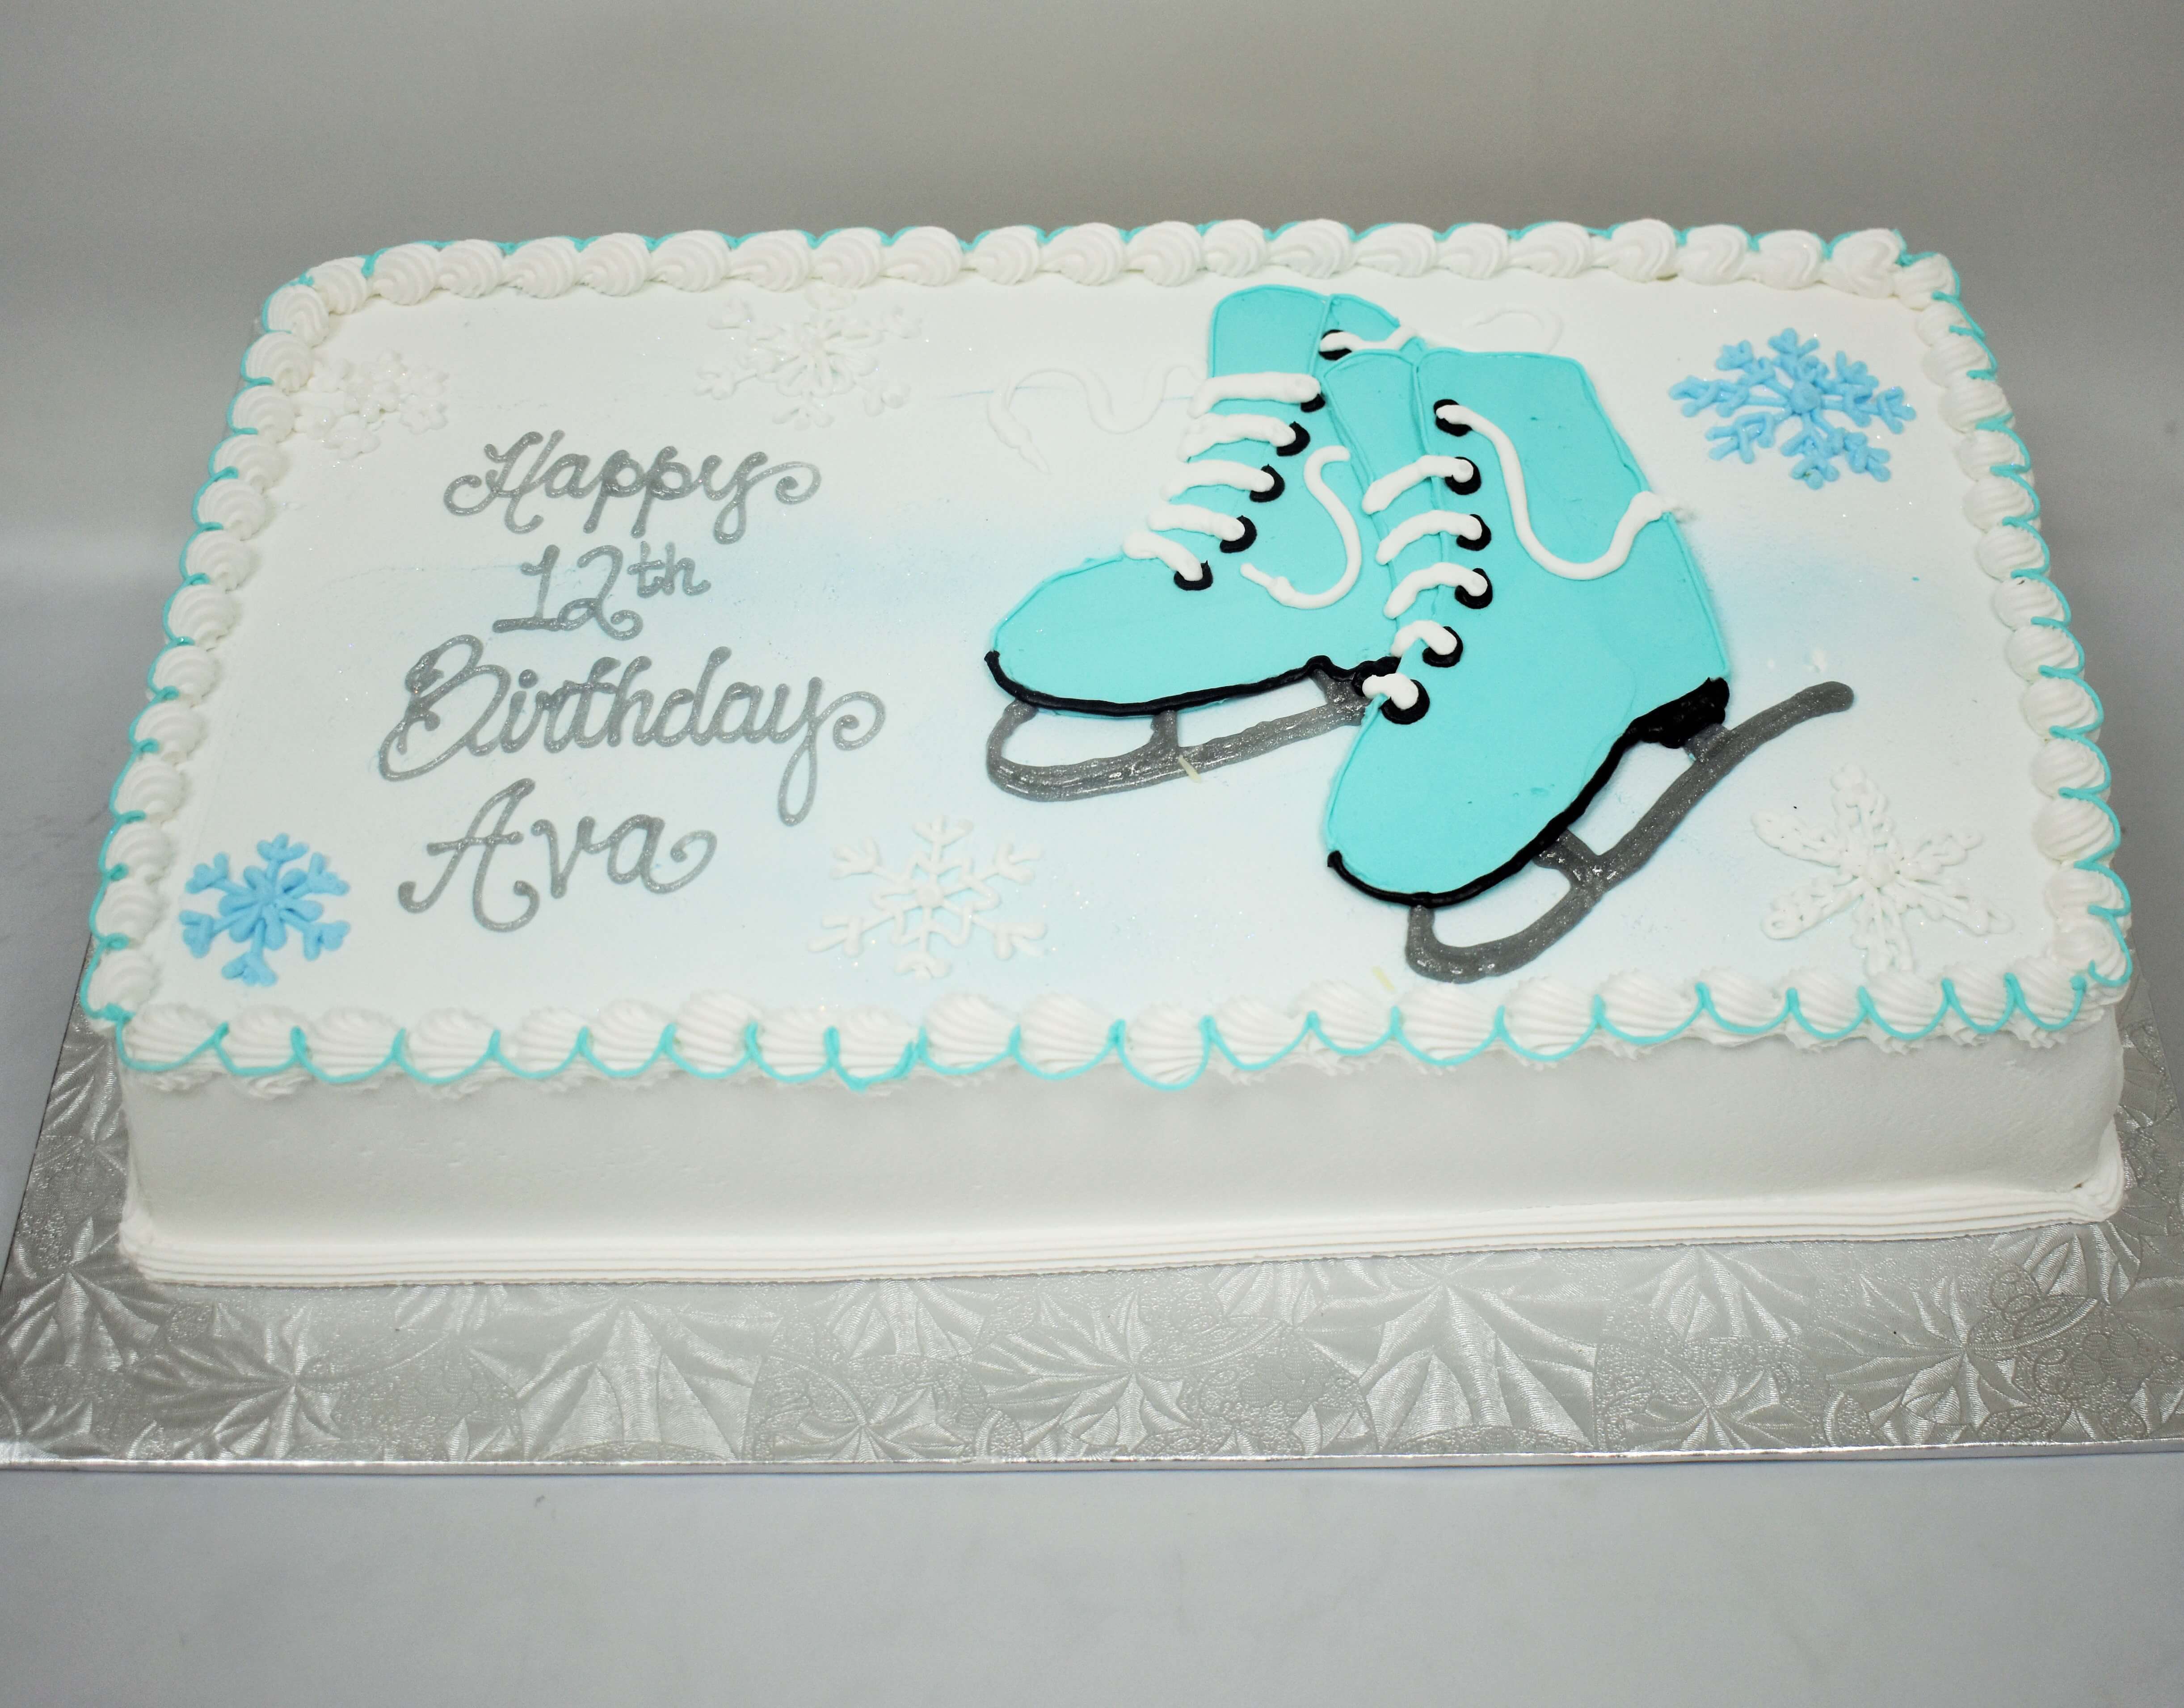 MaArthur's Bakery Custom Cake with Ice Skates and Snow Flakes